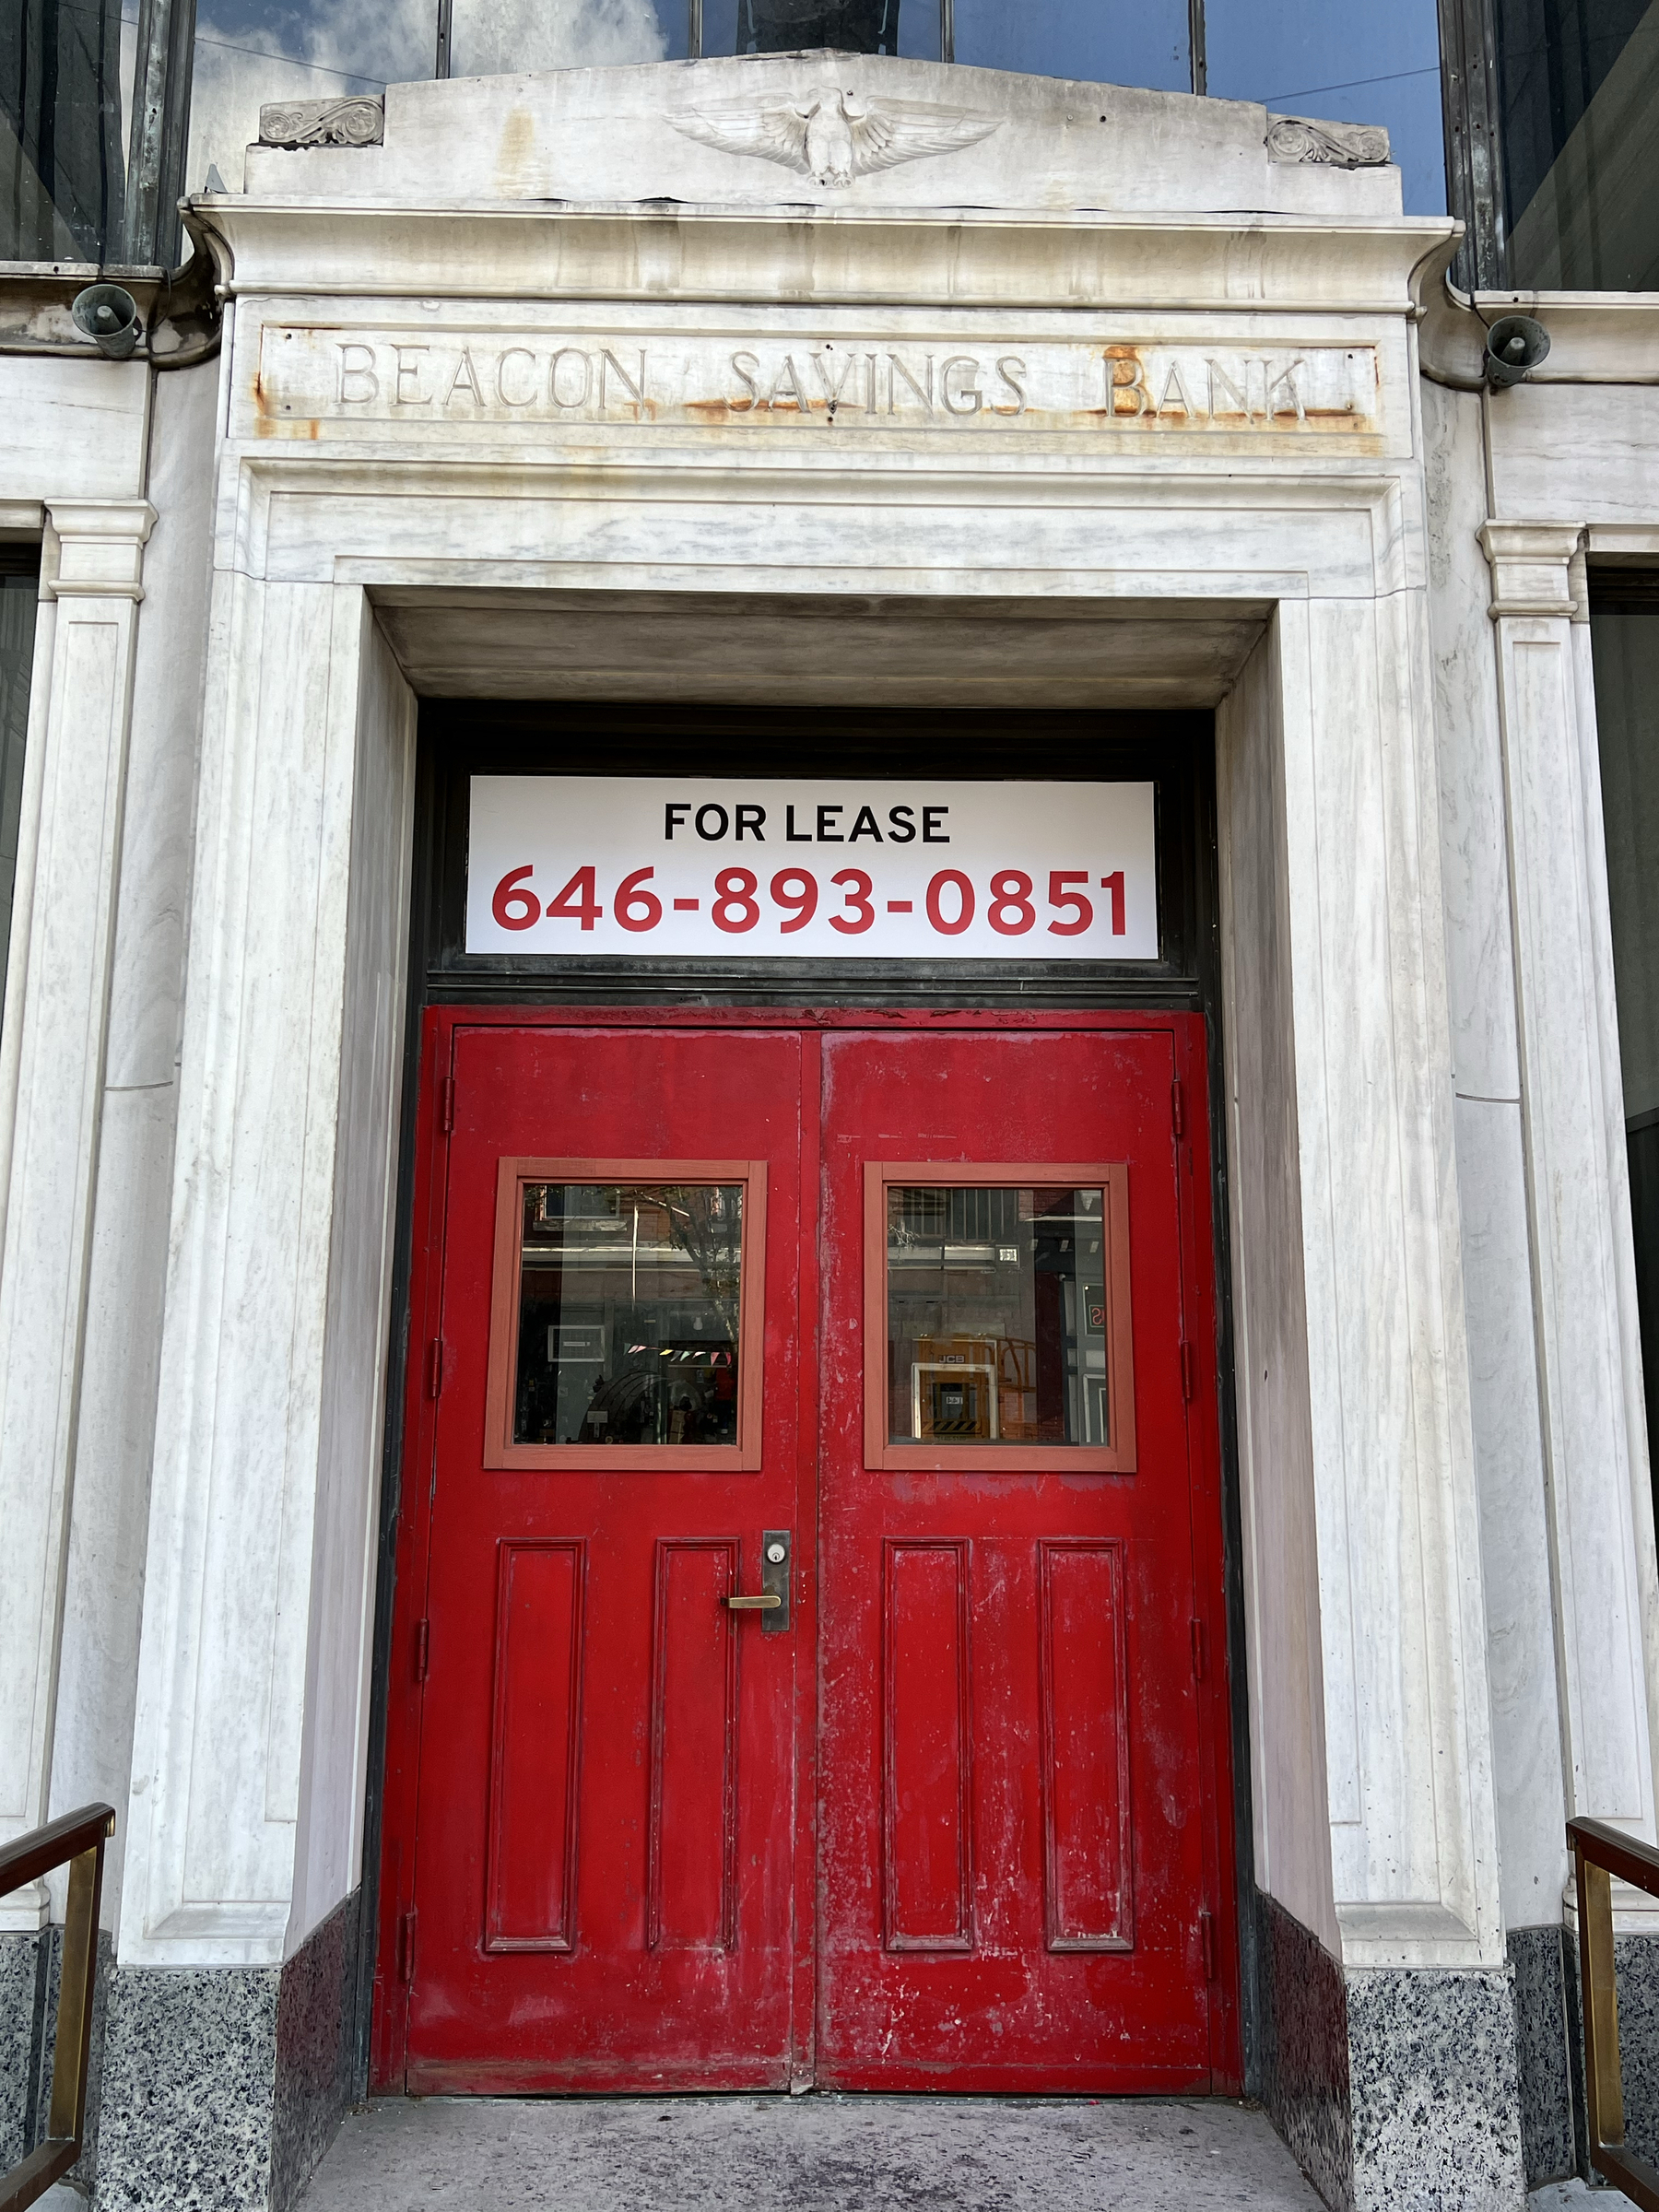 Red door at Beacon Savings Bank building in Beacon, NY